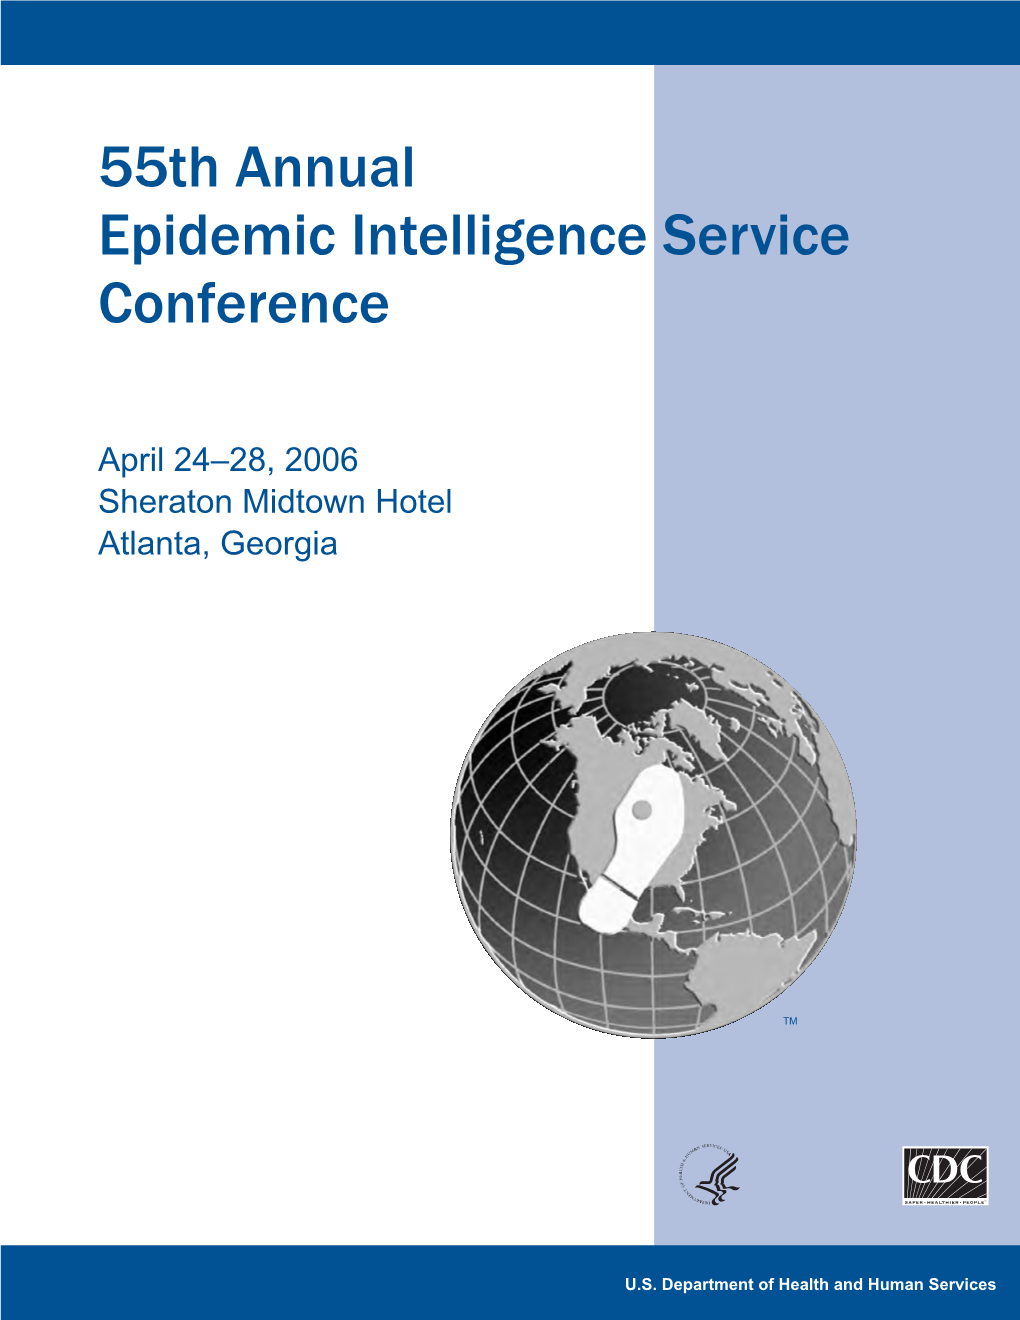 2006 Annual Epidemic Intelligence Service Conference Program